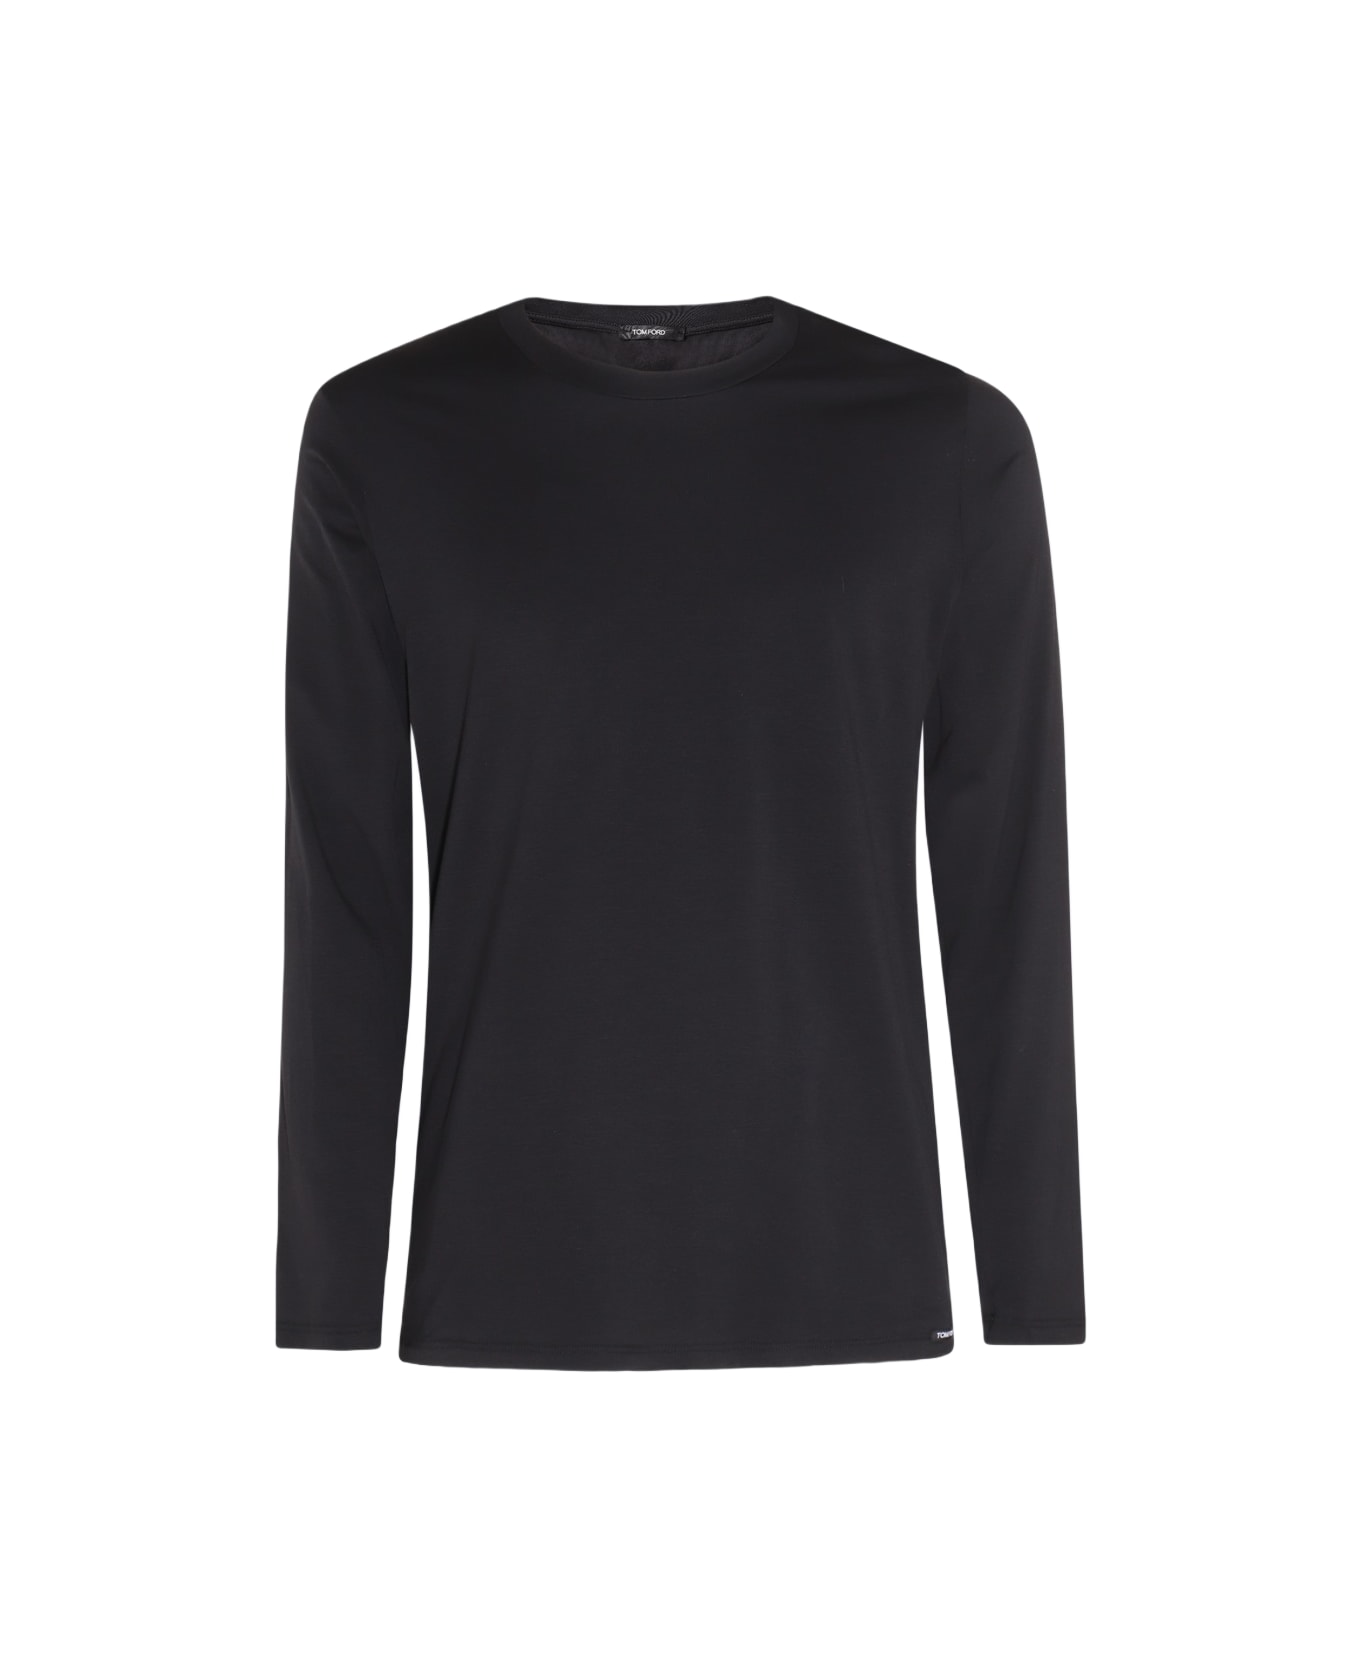 Tom Ford Black Cotton Blend T-shirt - Black